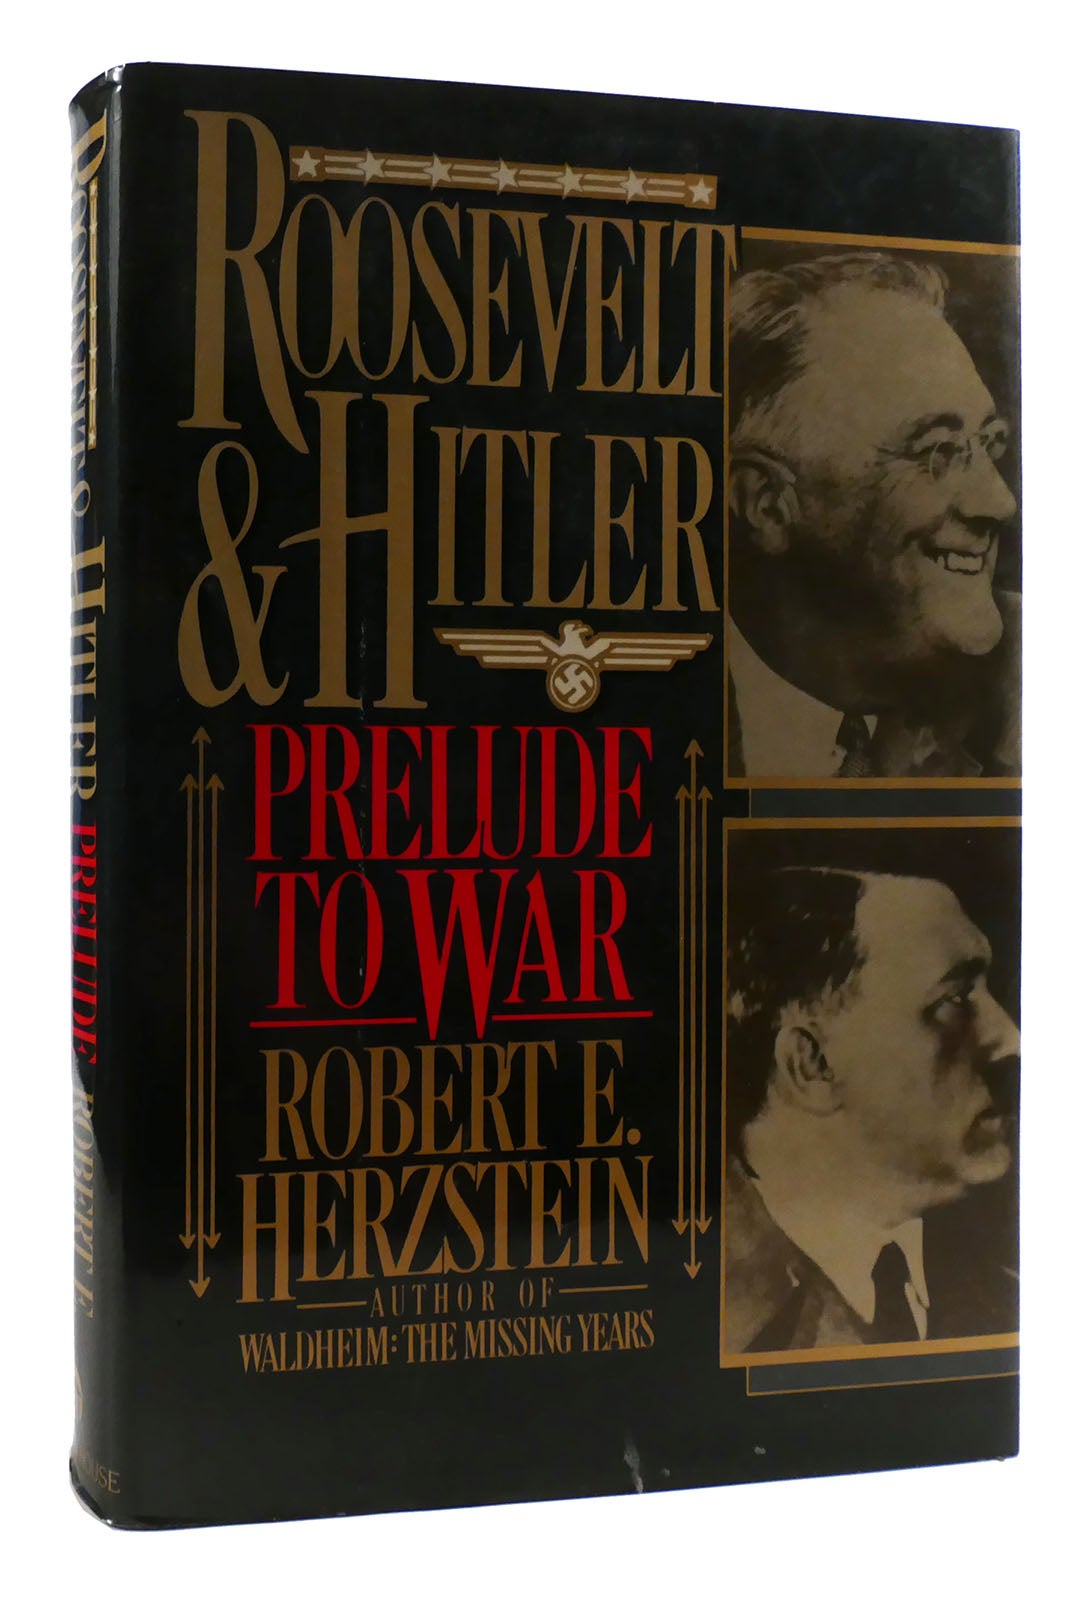 ROOSEVELT & HITLER: PRELUDE TO WAR by Robert E. Herzstein on Rare Book  Cellar